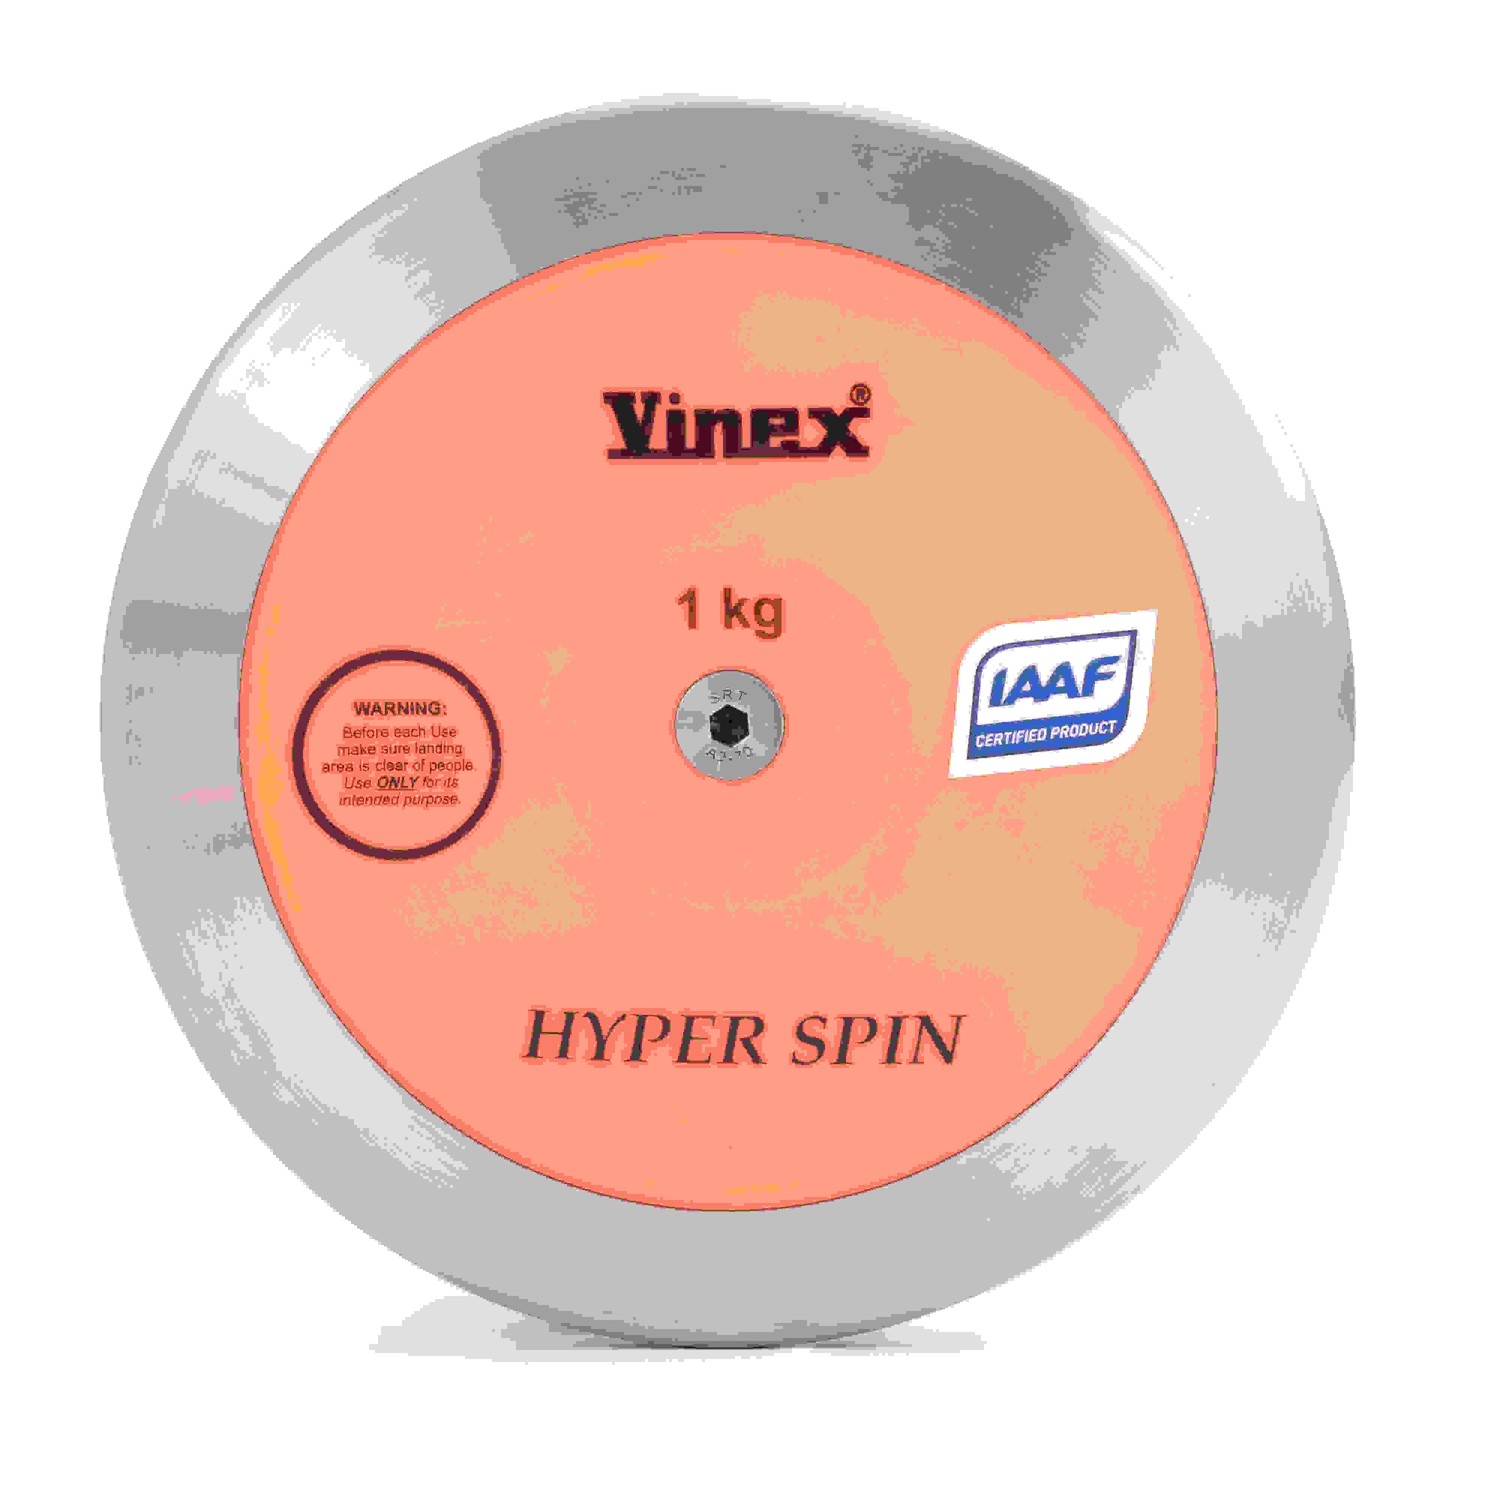 Hyper Spin Discus, 91% Rim Weight, 1kg